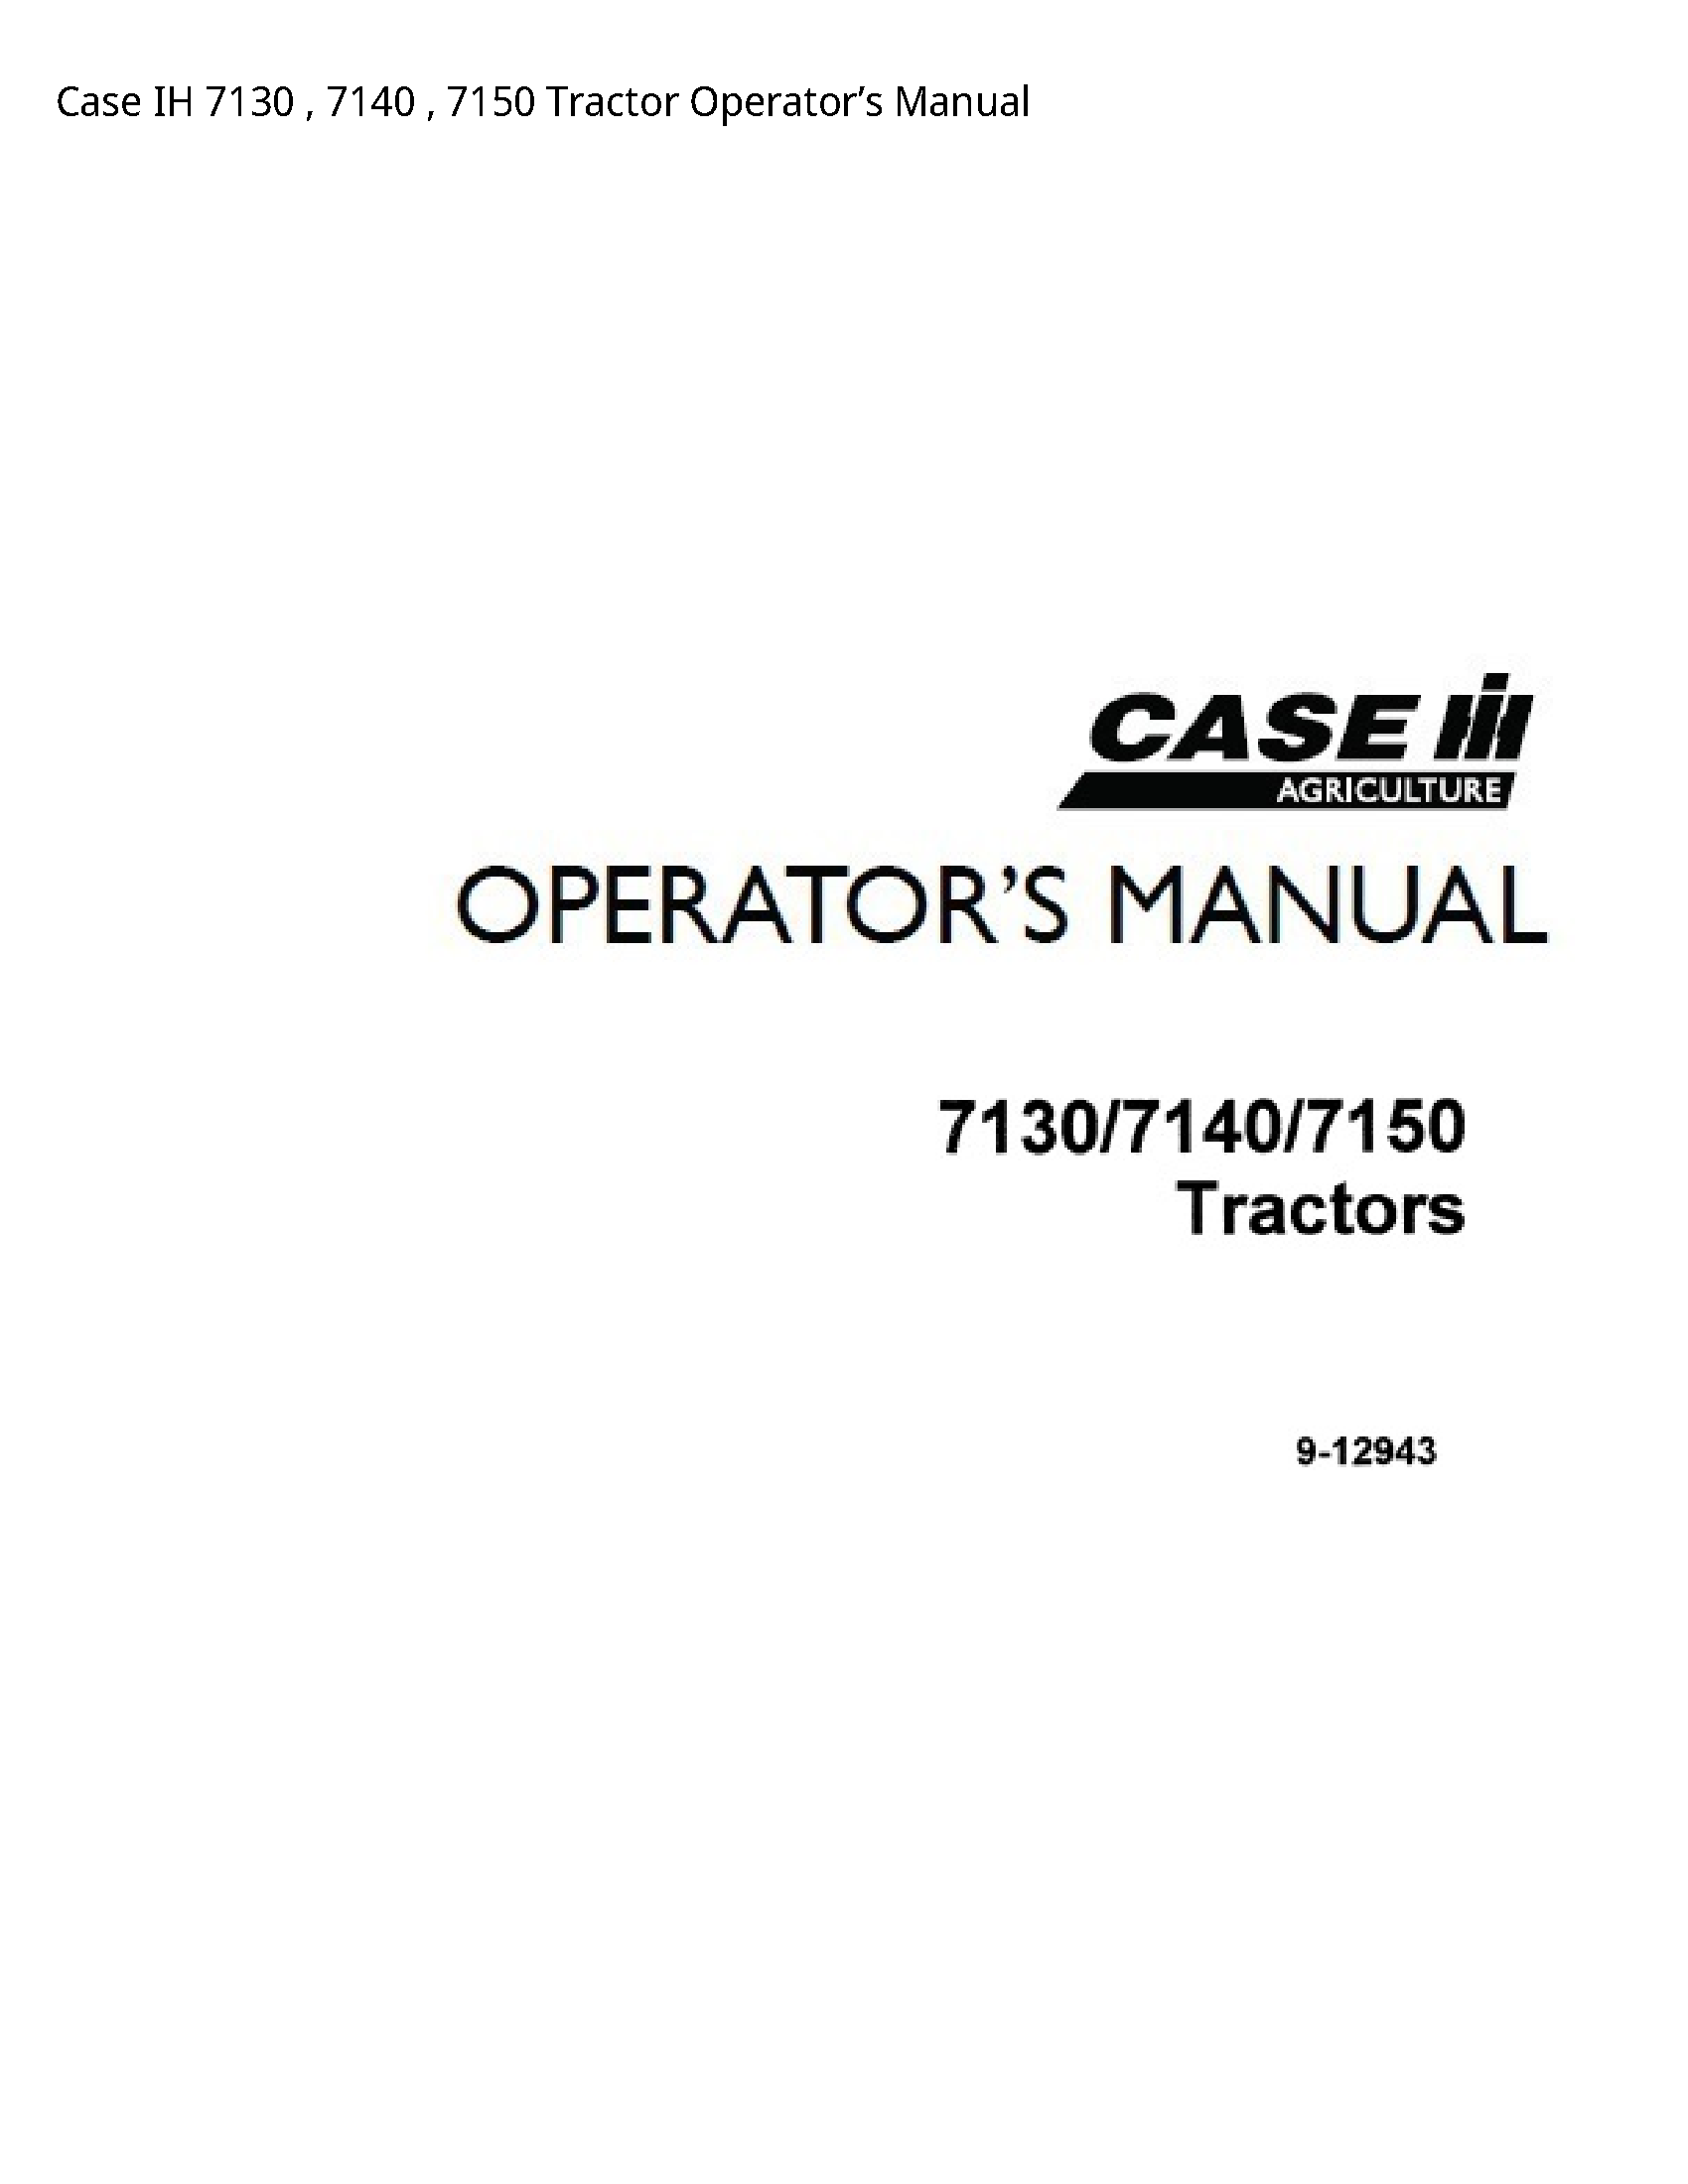 Case/Case IH 7130 IH Tractor Operator’s manual